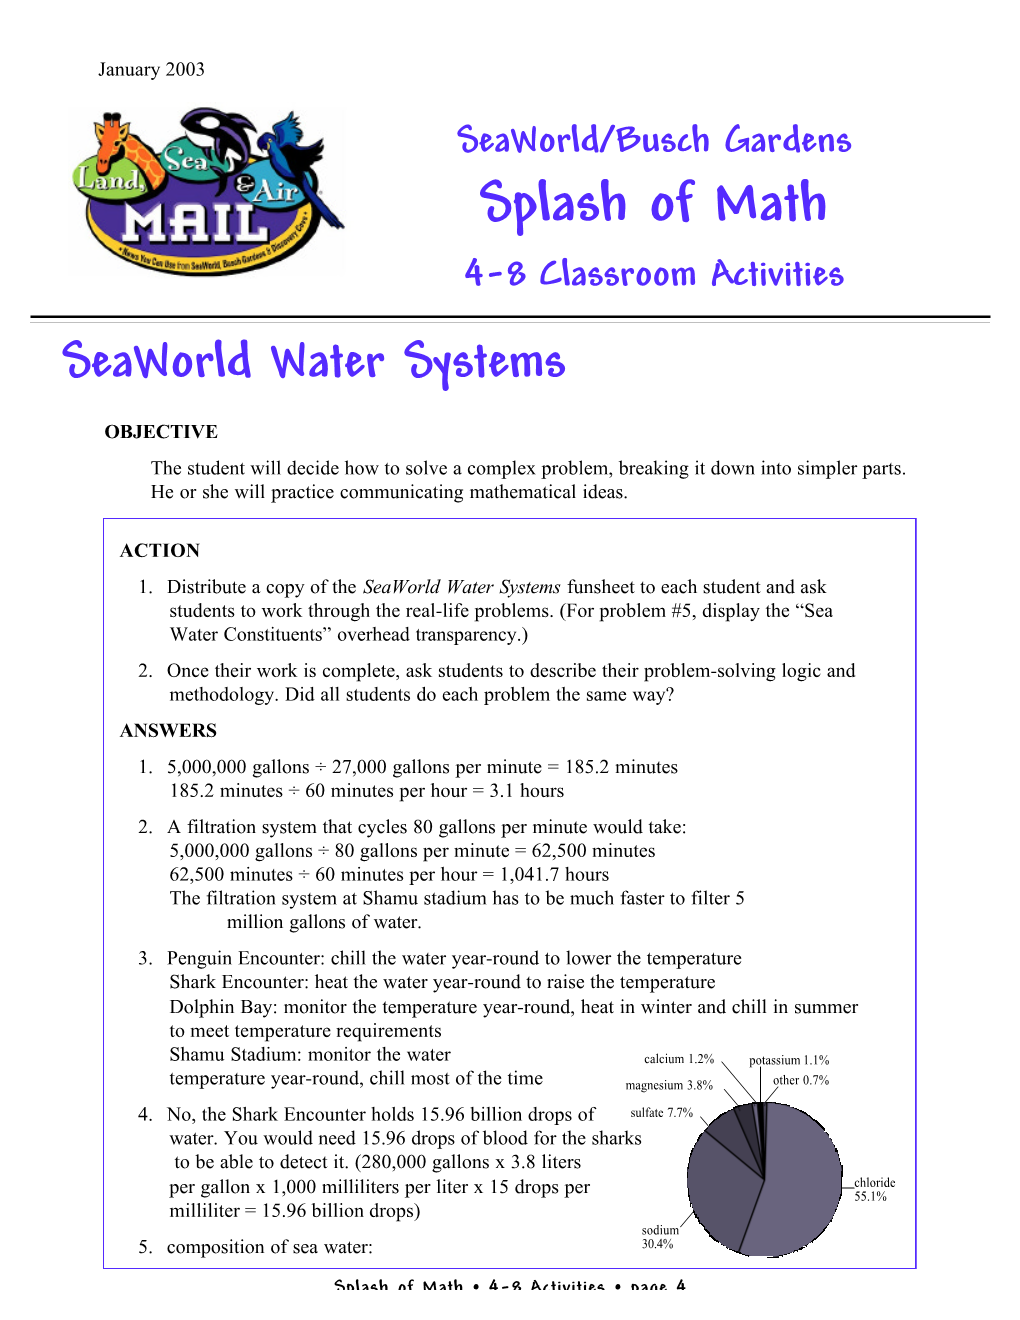 Splash of Math: 4-8 Classroom Activities